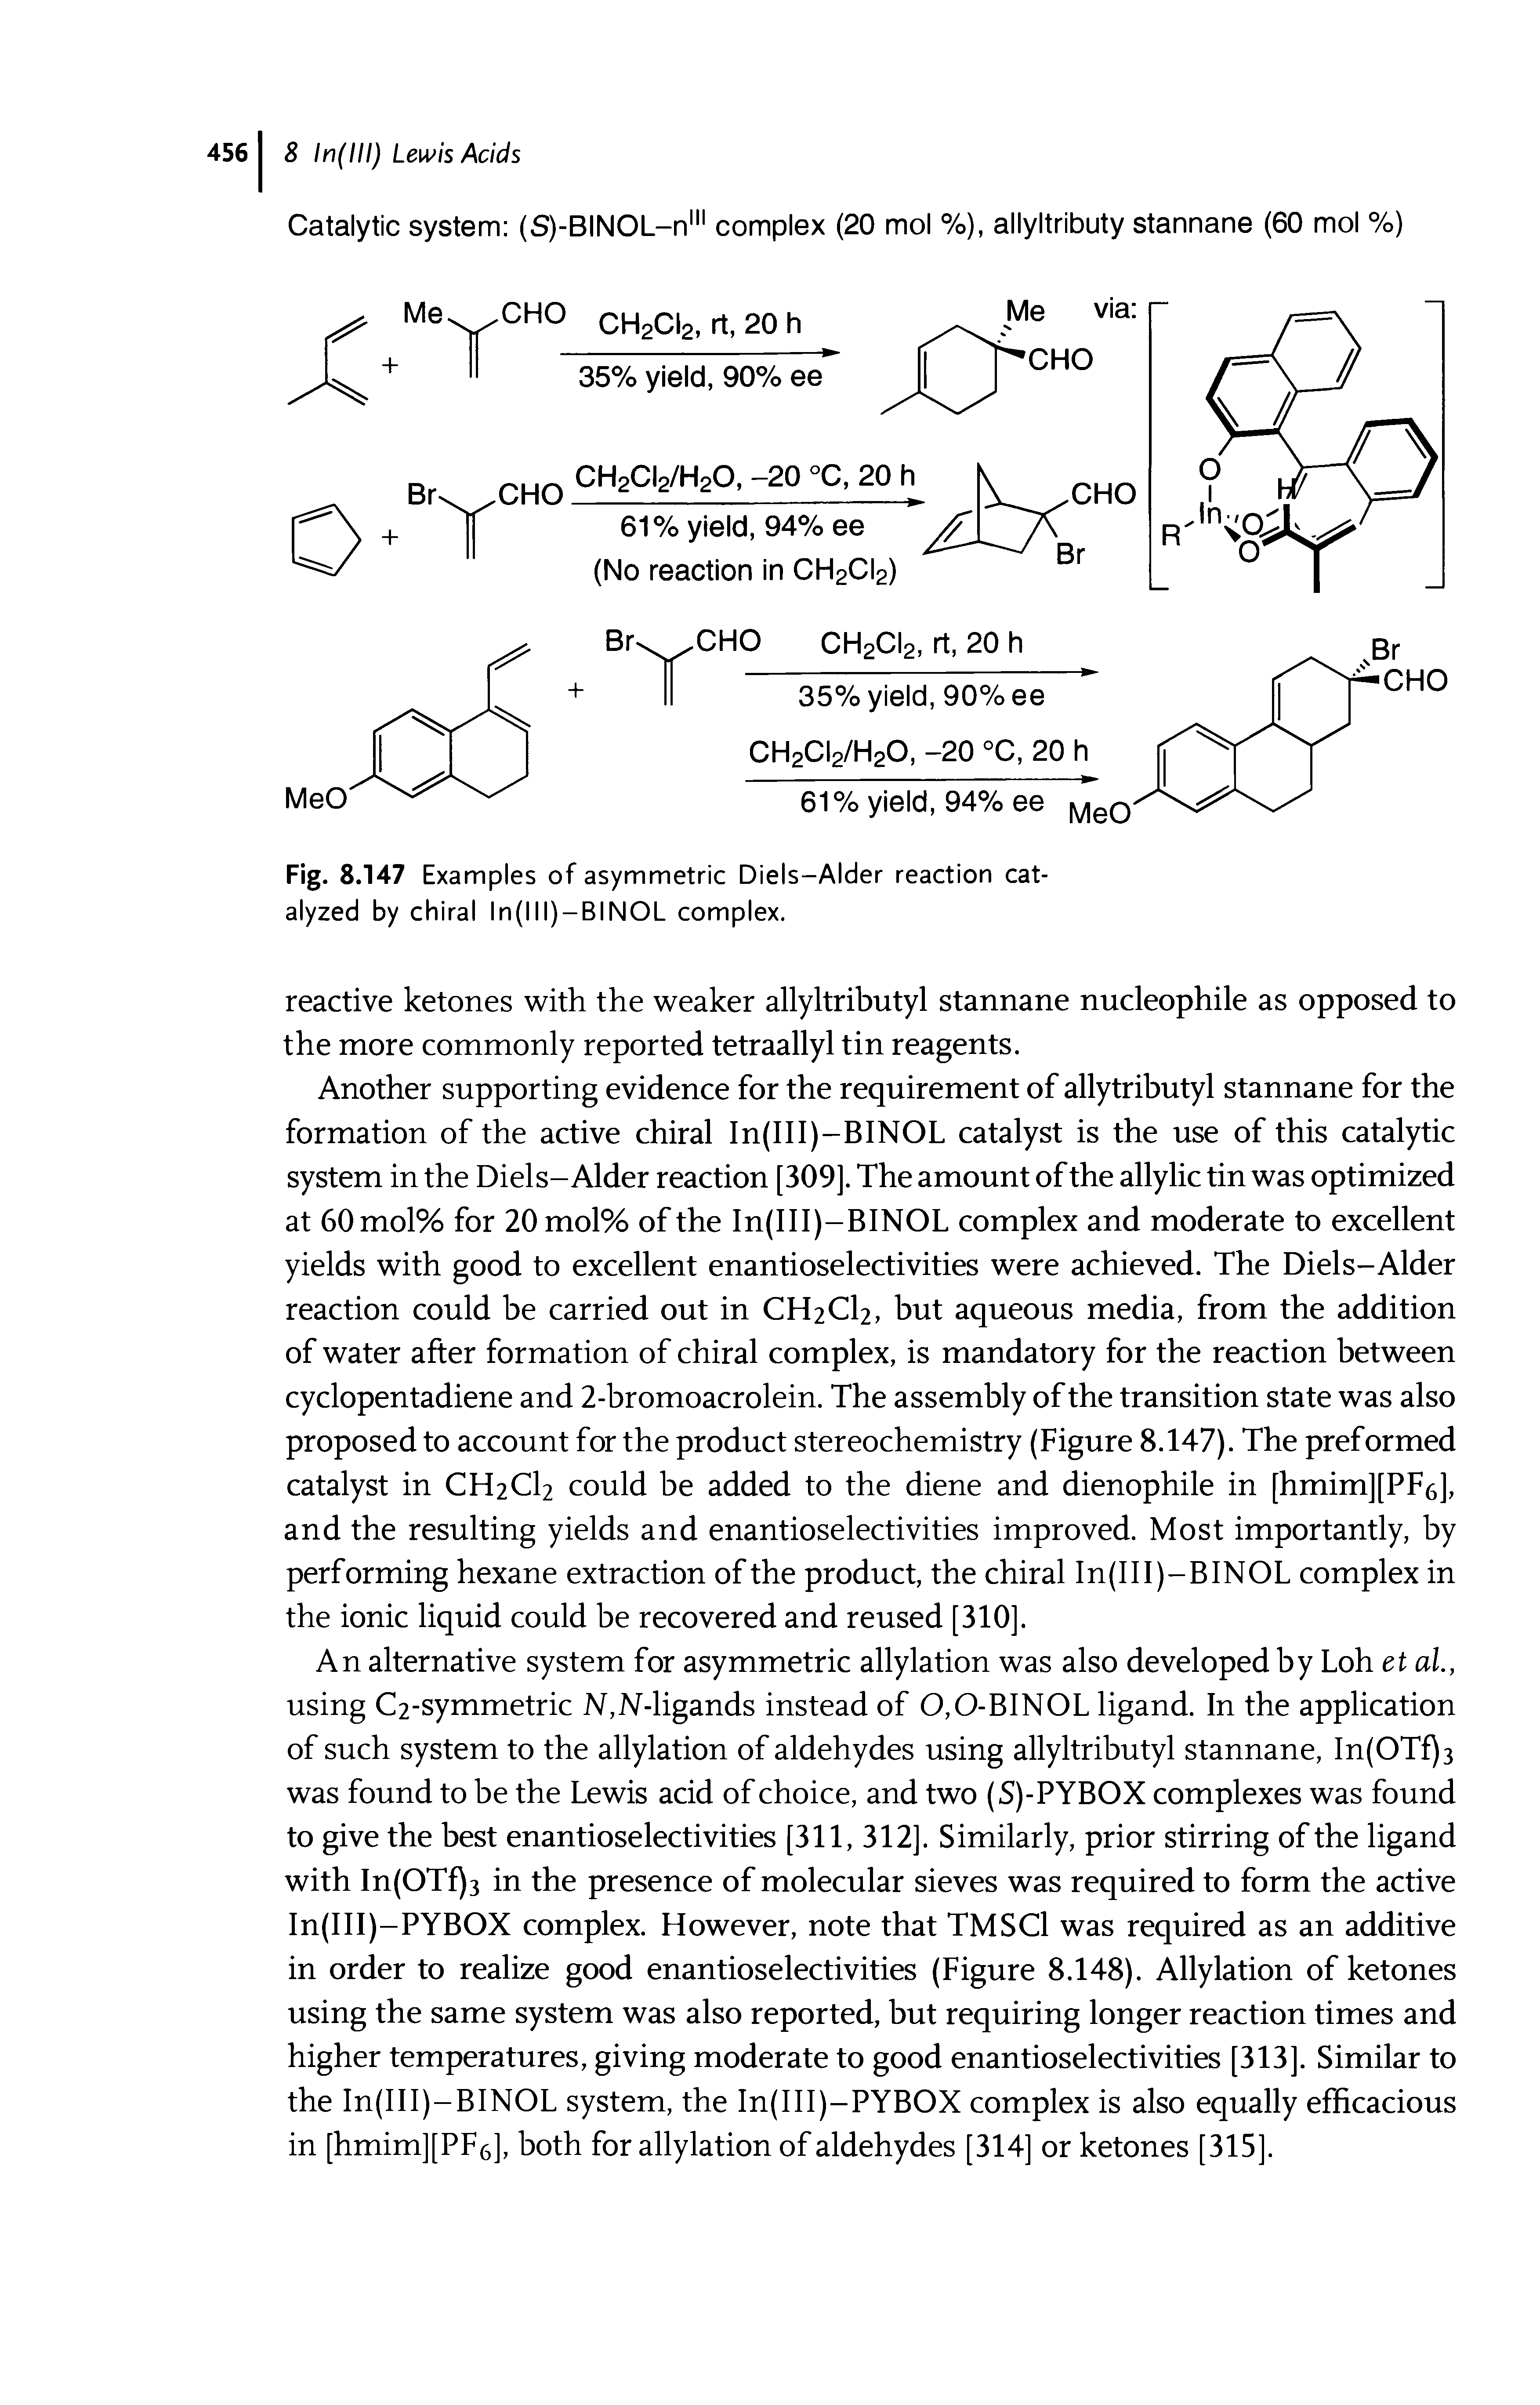 Fig. 8.147 Examples of asymmetric Diels-Alder reaction catalyzed by chiral ln(lll)-BINOL complex.